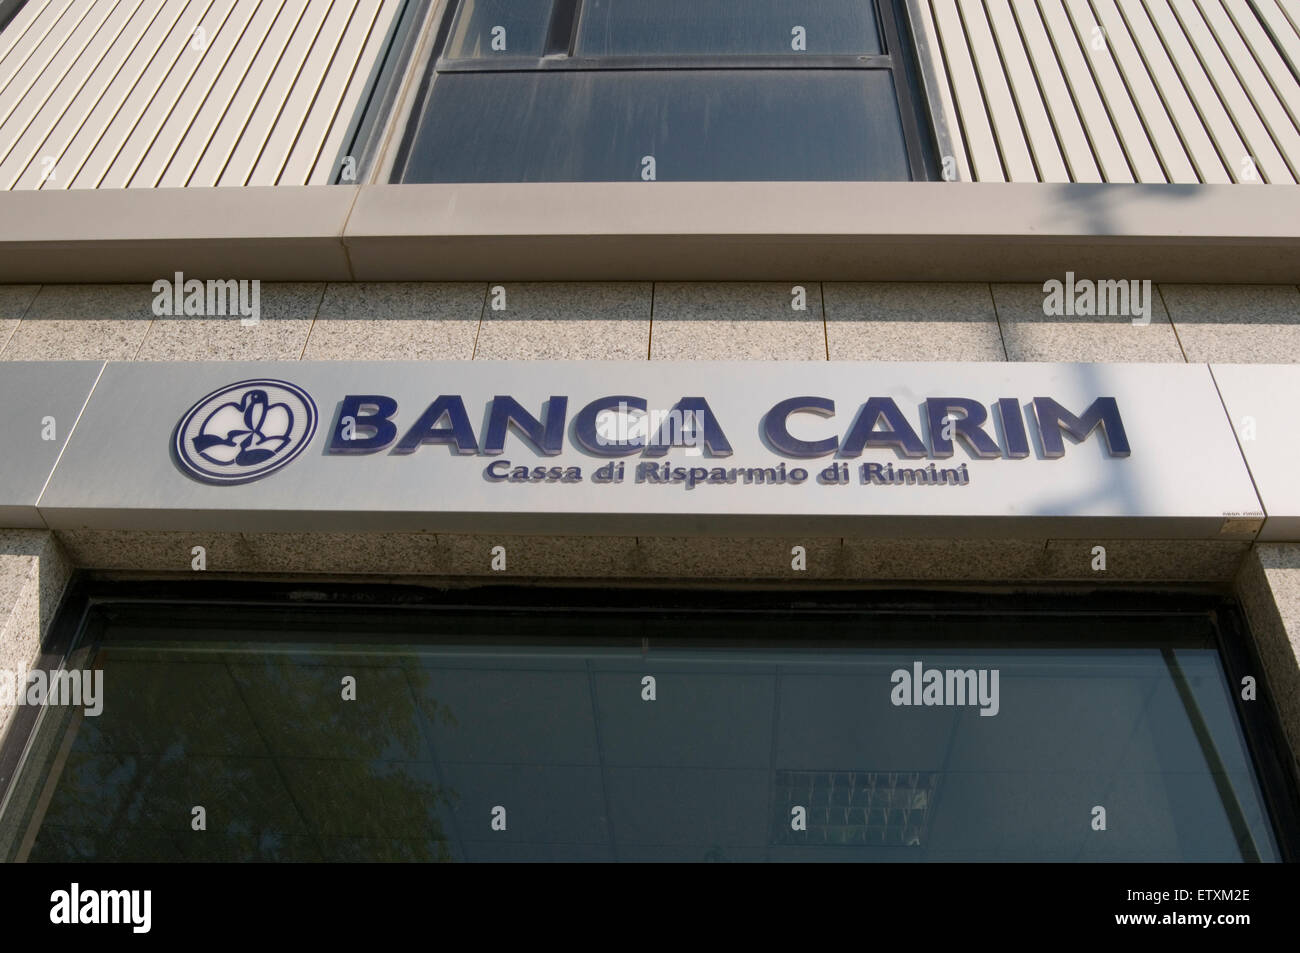 Cassa di Risparmio di Rimini  Banca Carim  italy italian bank banks banking industry Stock Photo